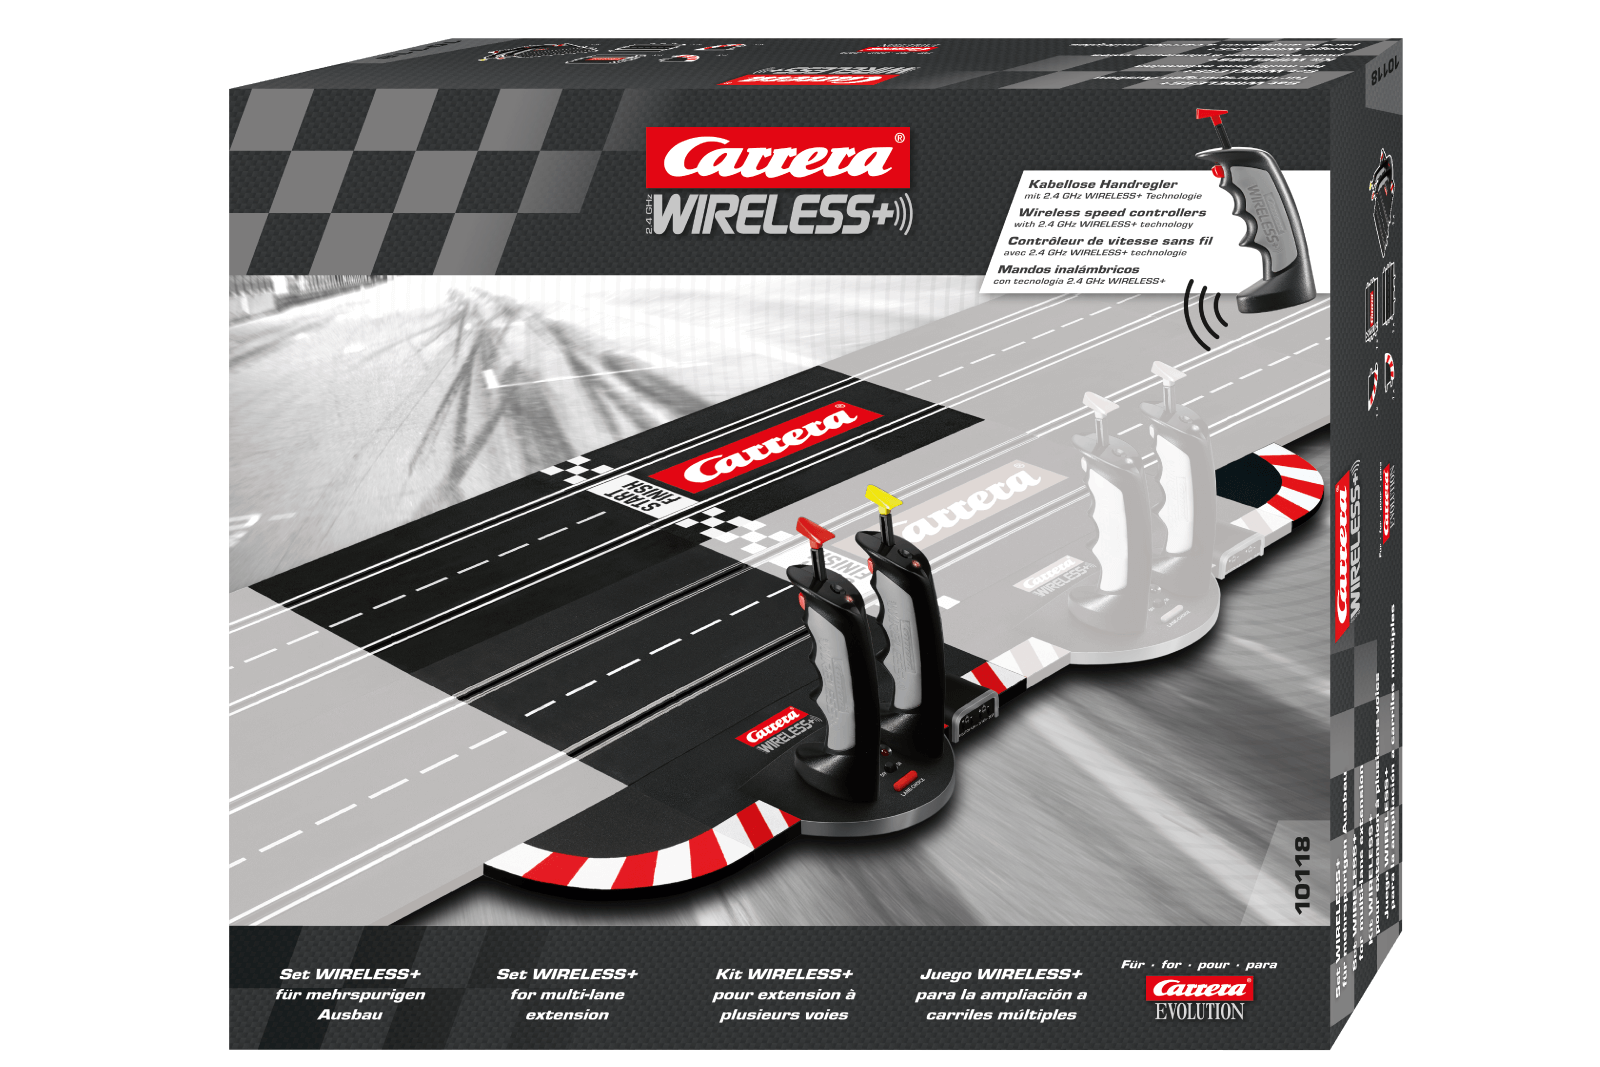  Carrera WIRELESS + Set pour extension à plusieurs voies Carrera Evolu